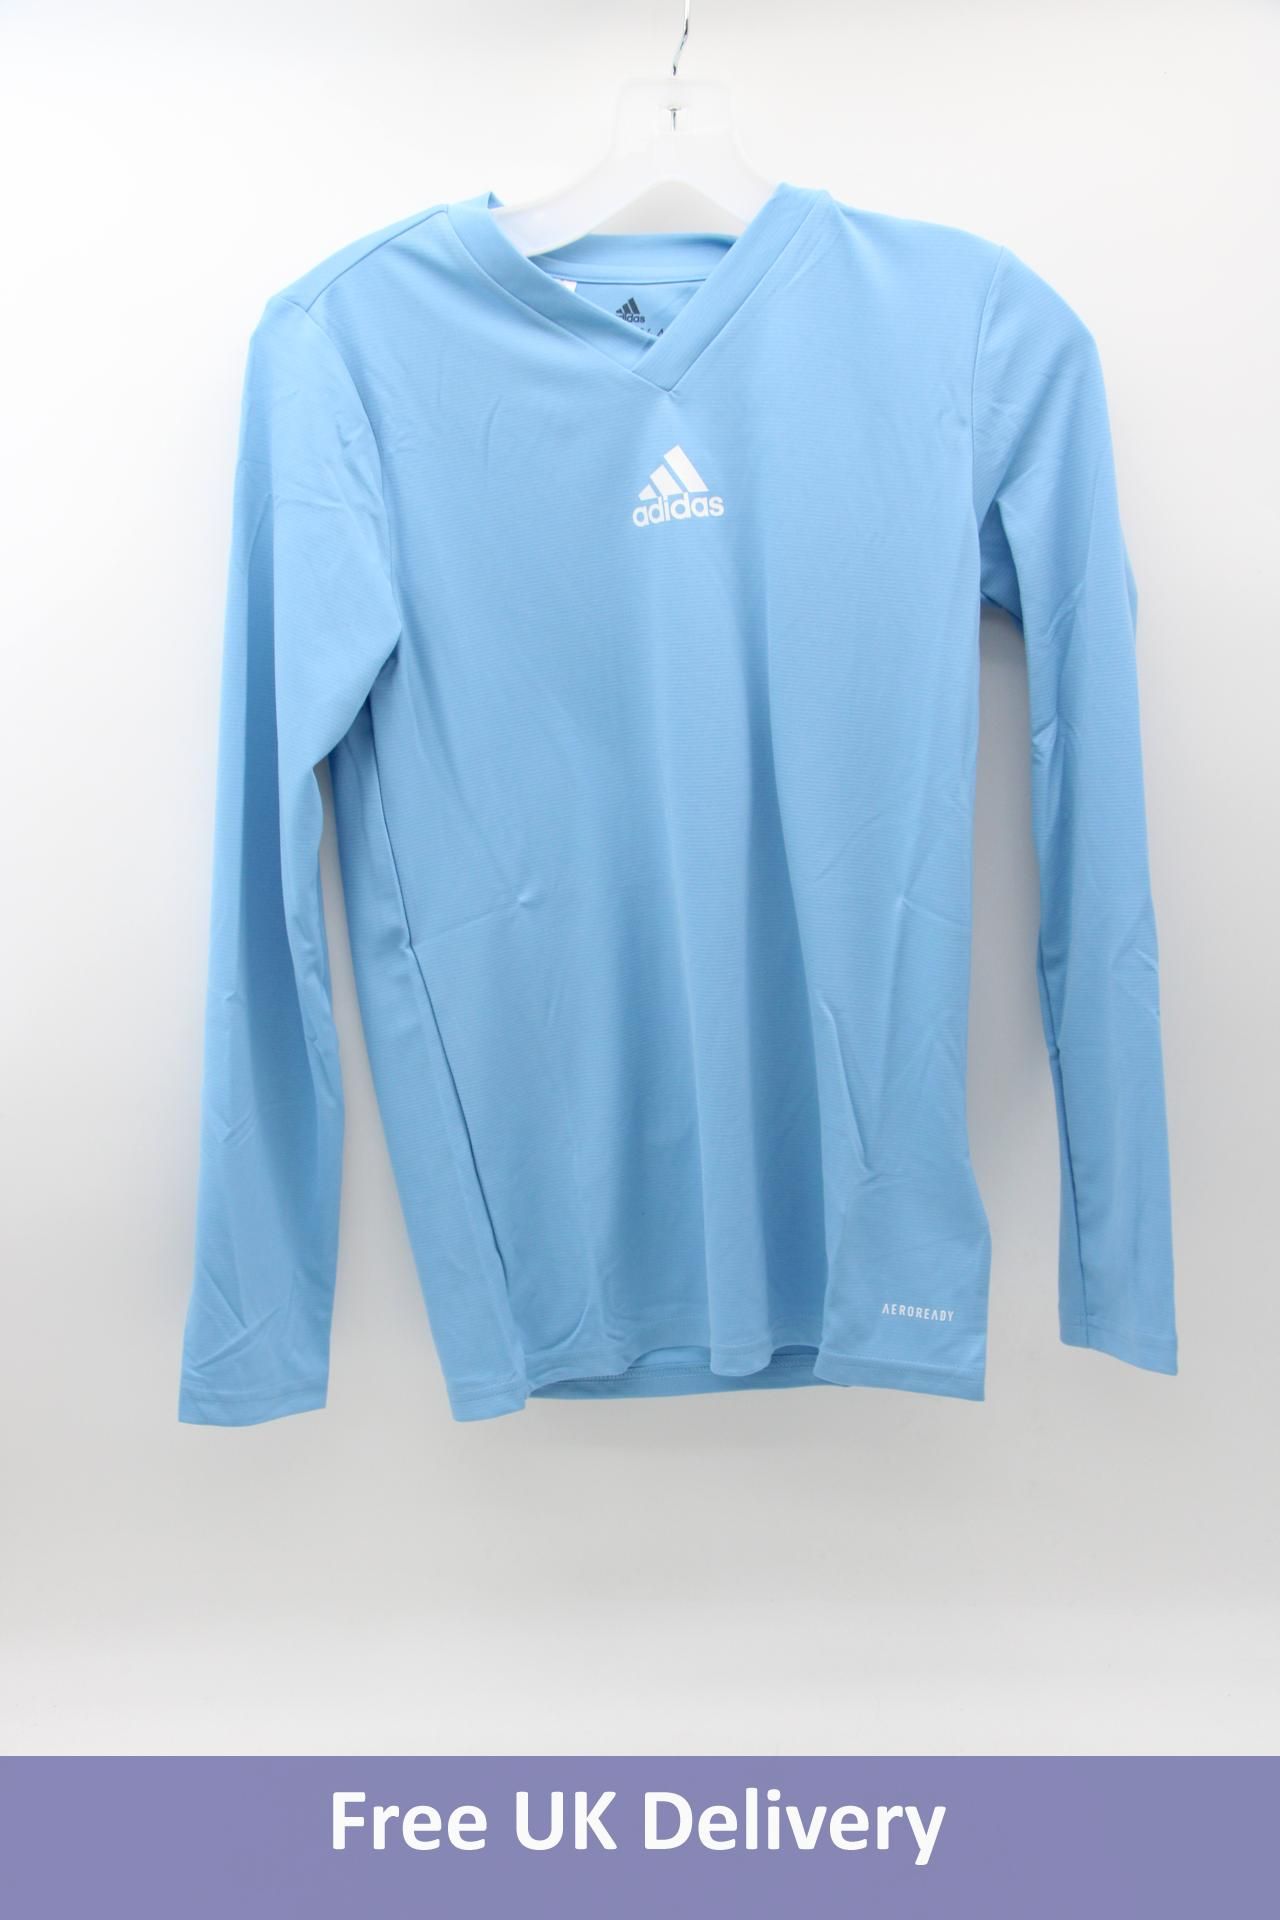 Three Adidas Base Long Sleeve T-Shirts, Blue, UK Size Include 2x 9-10, 1x 5-6 Years